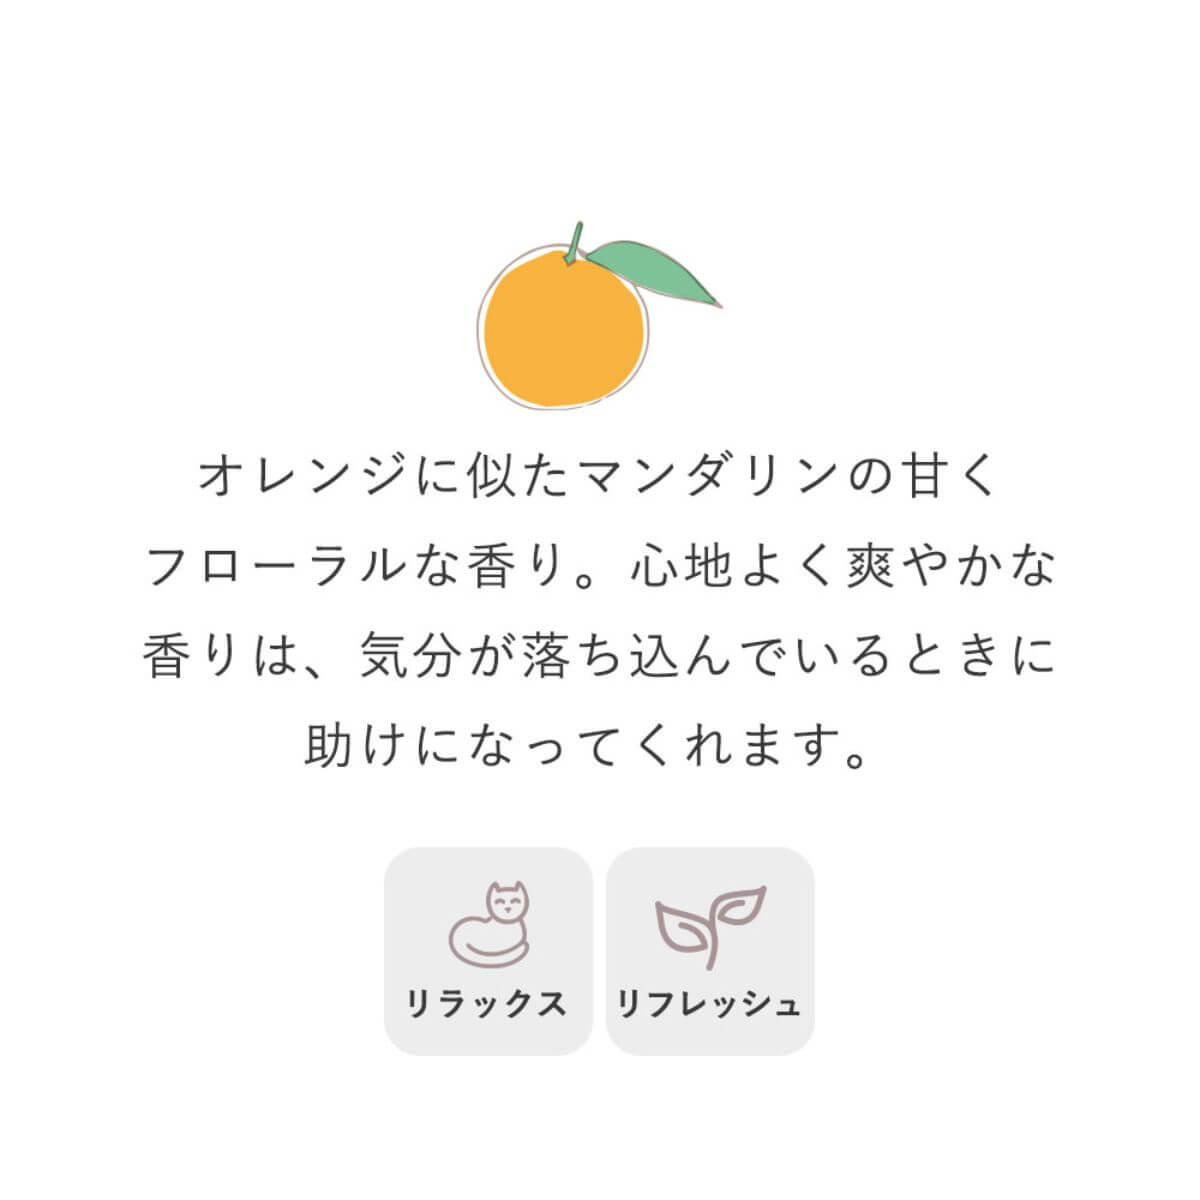 Ogaroma 柑橘│